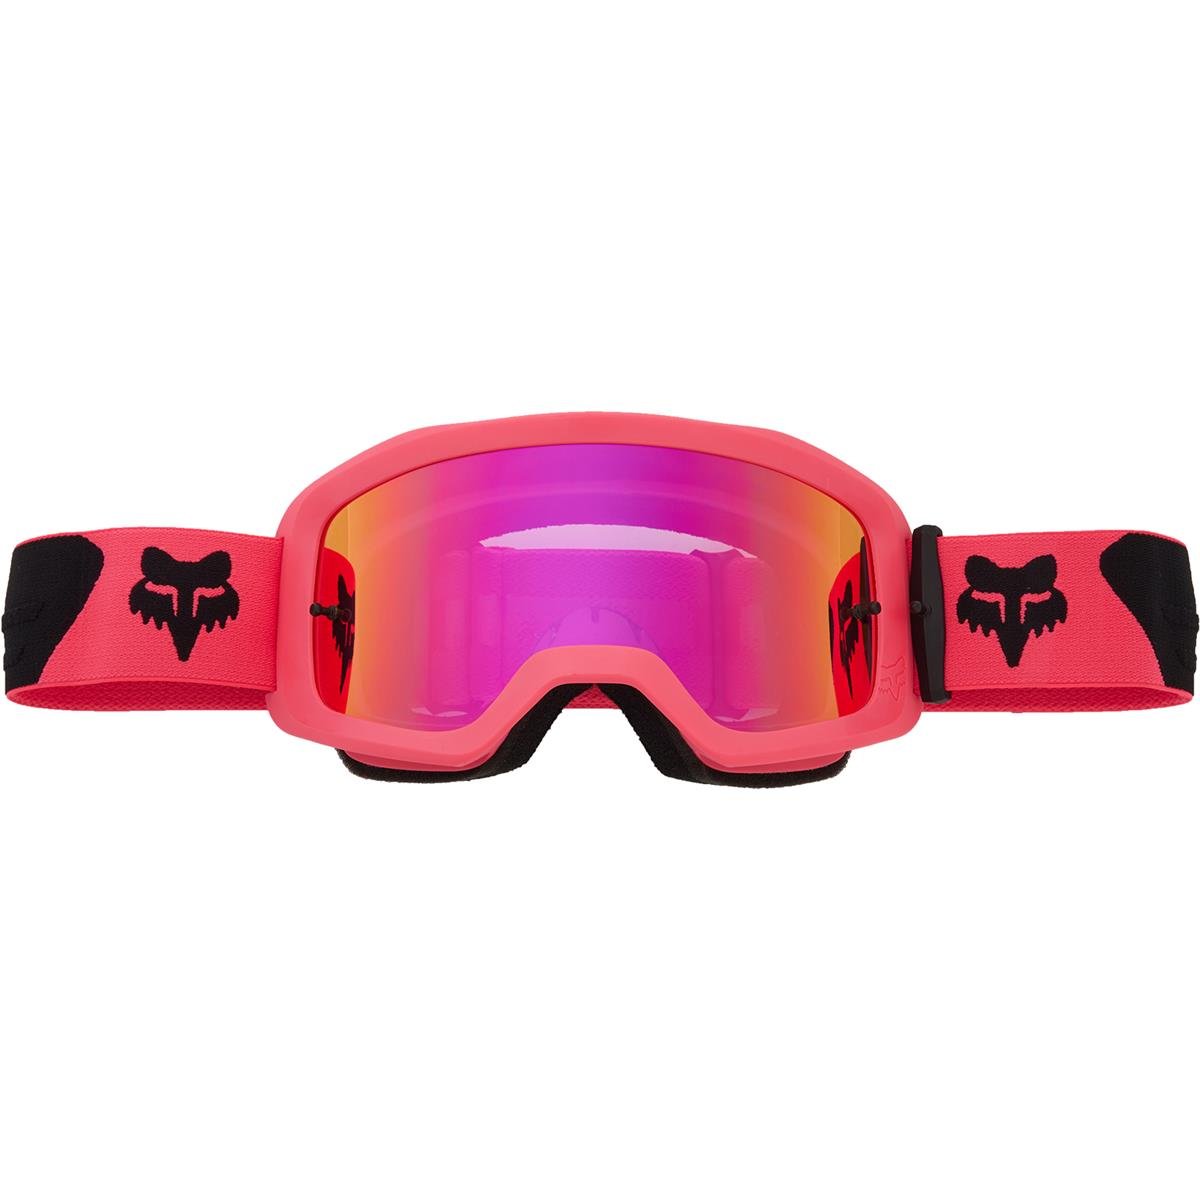 Fox Masque Main Core - Spark - Pink, Mirrored